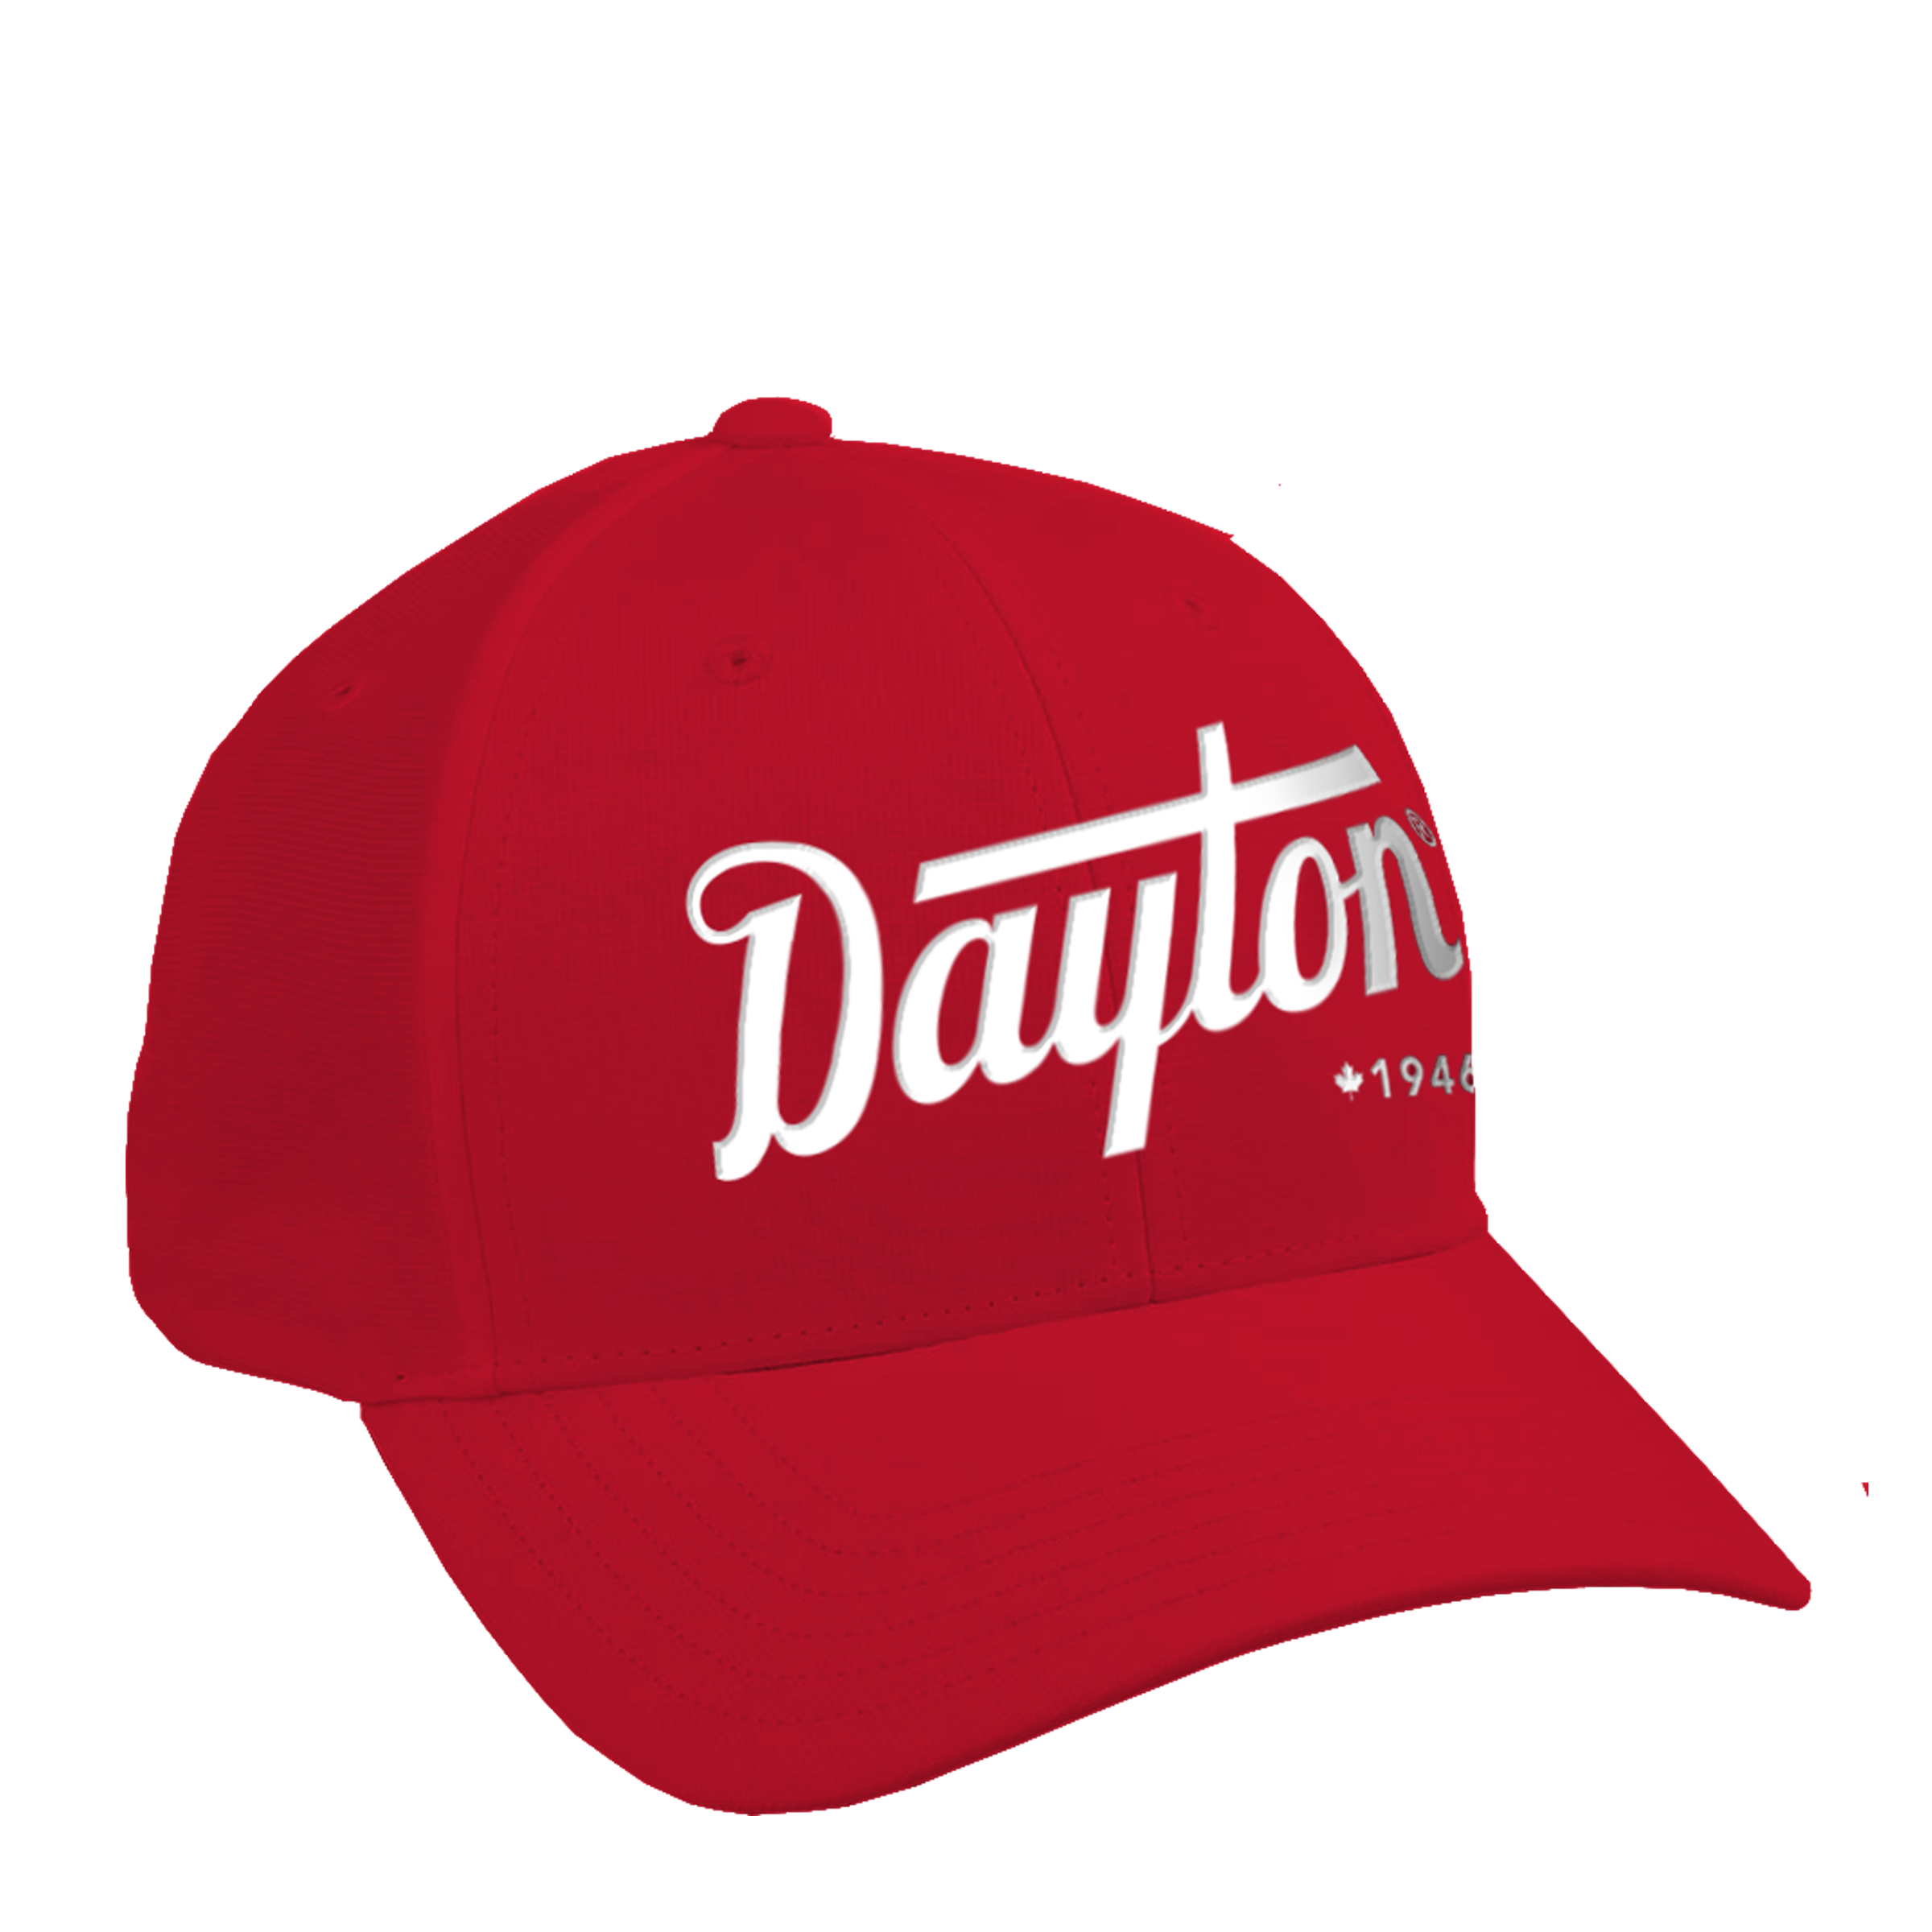 Dayton Script Fitted Cap - Apparel